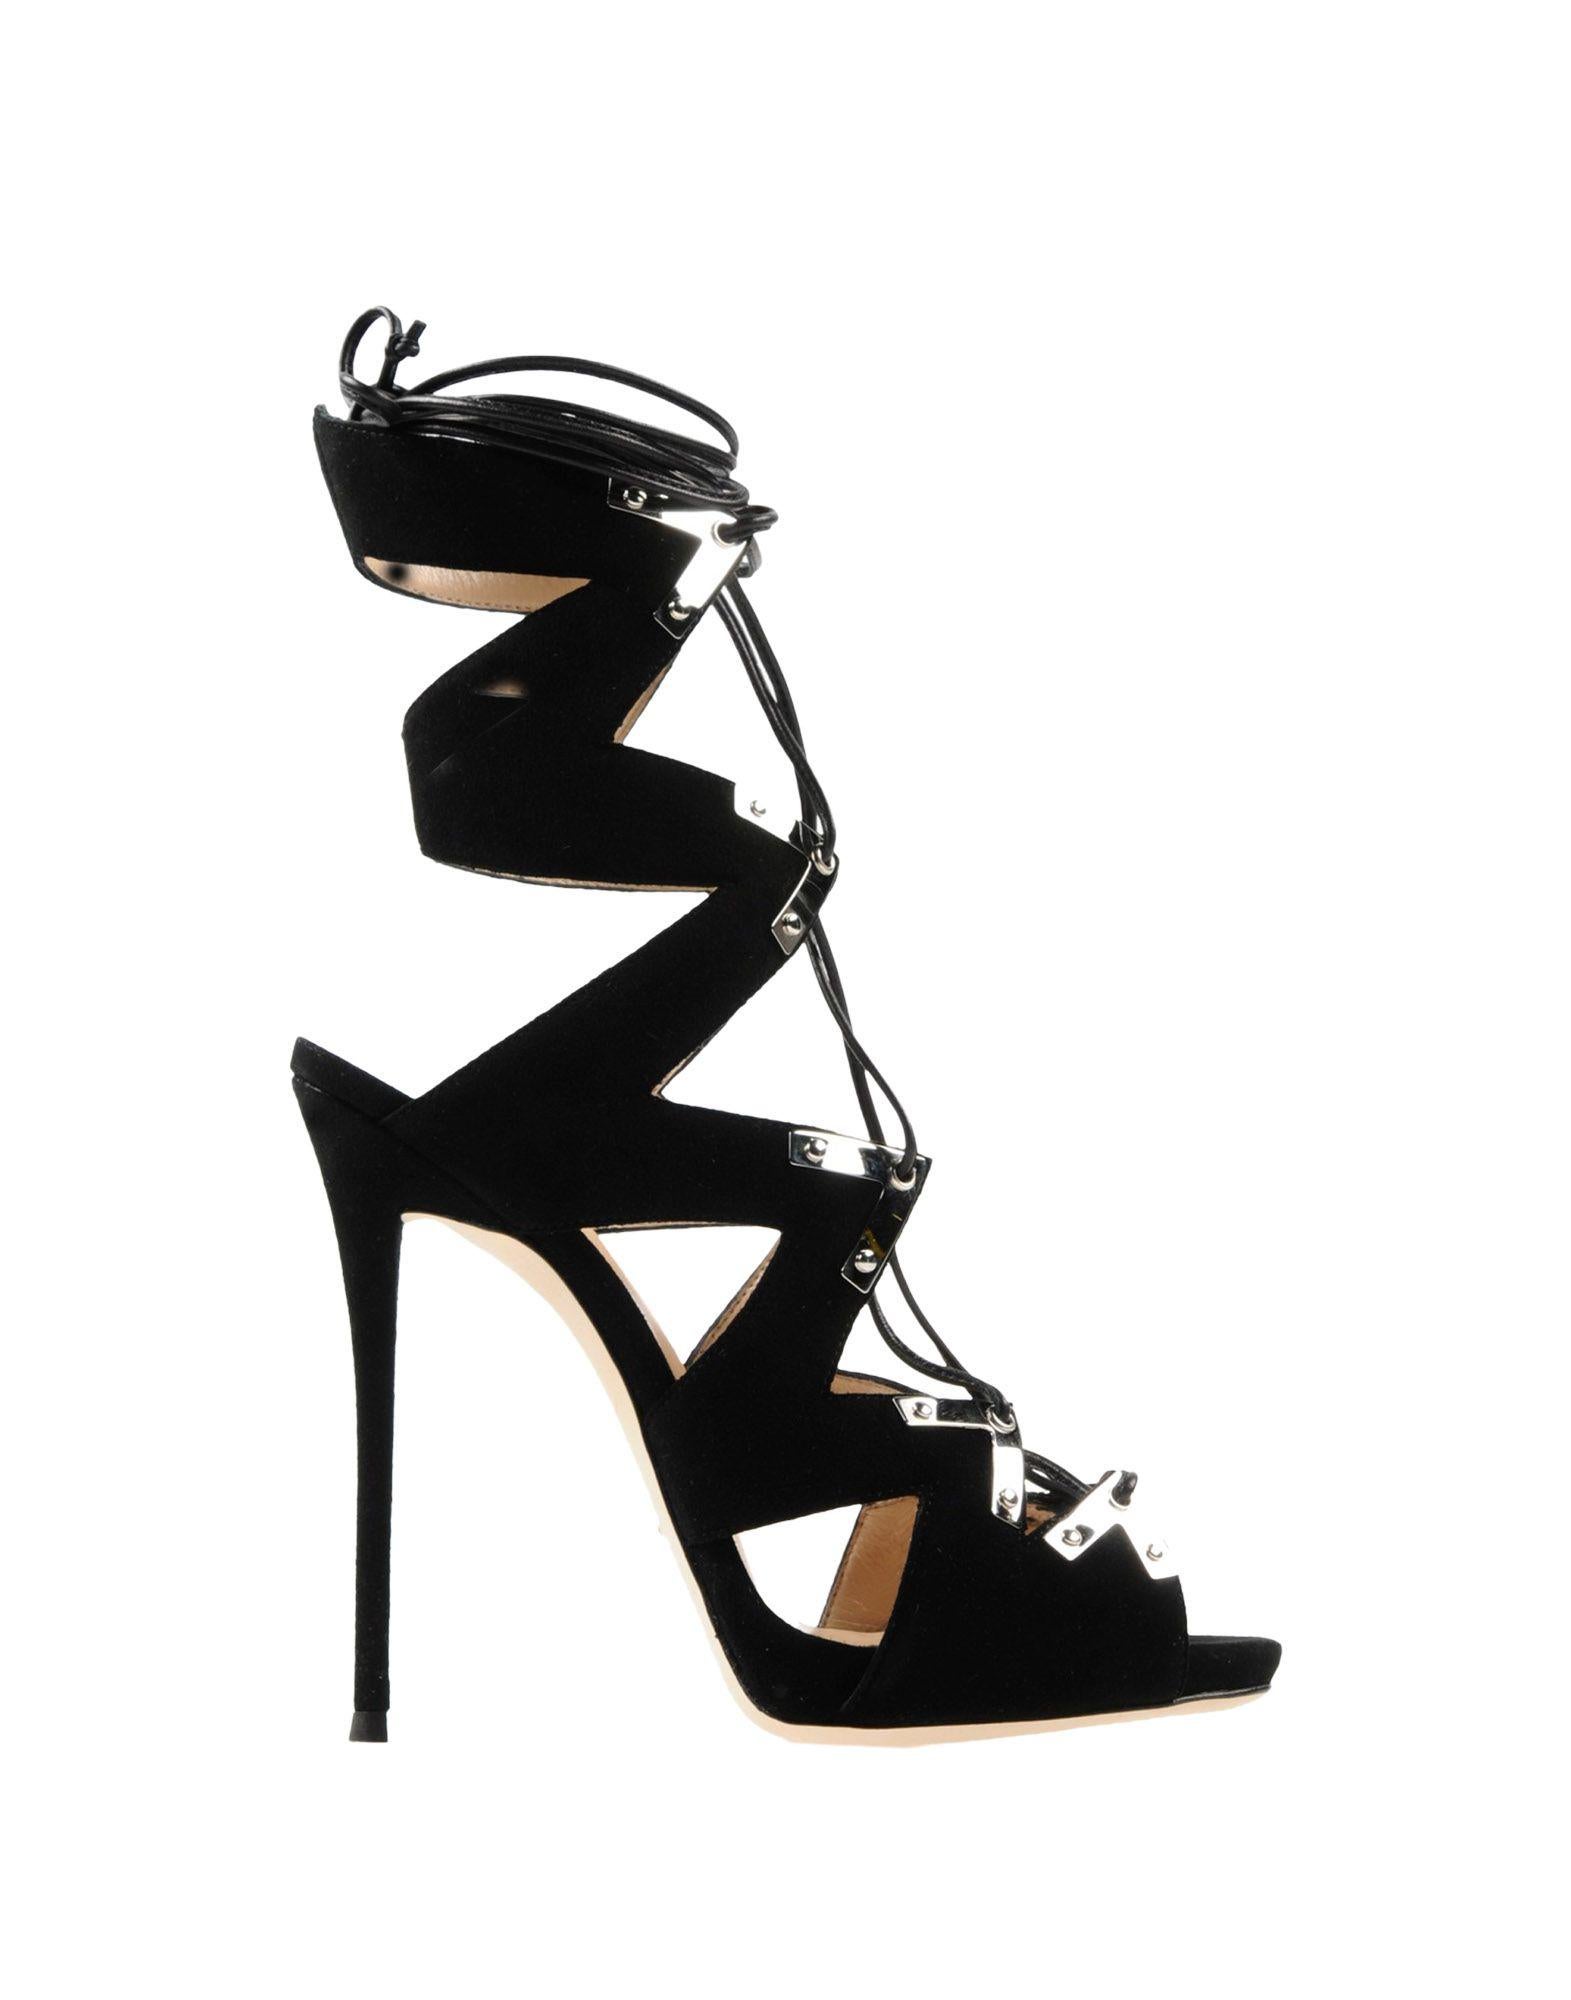 Women's Giuseppe Zanotti NEW Black Suede Metal Cut Out Tie Up Evening Sandals Heels